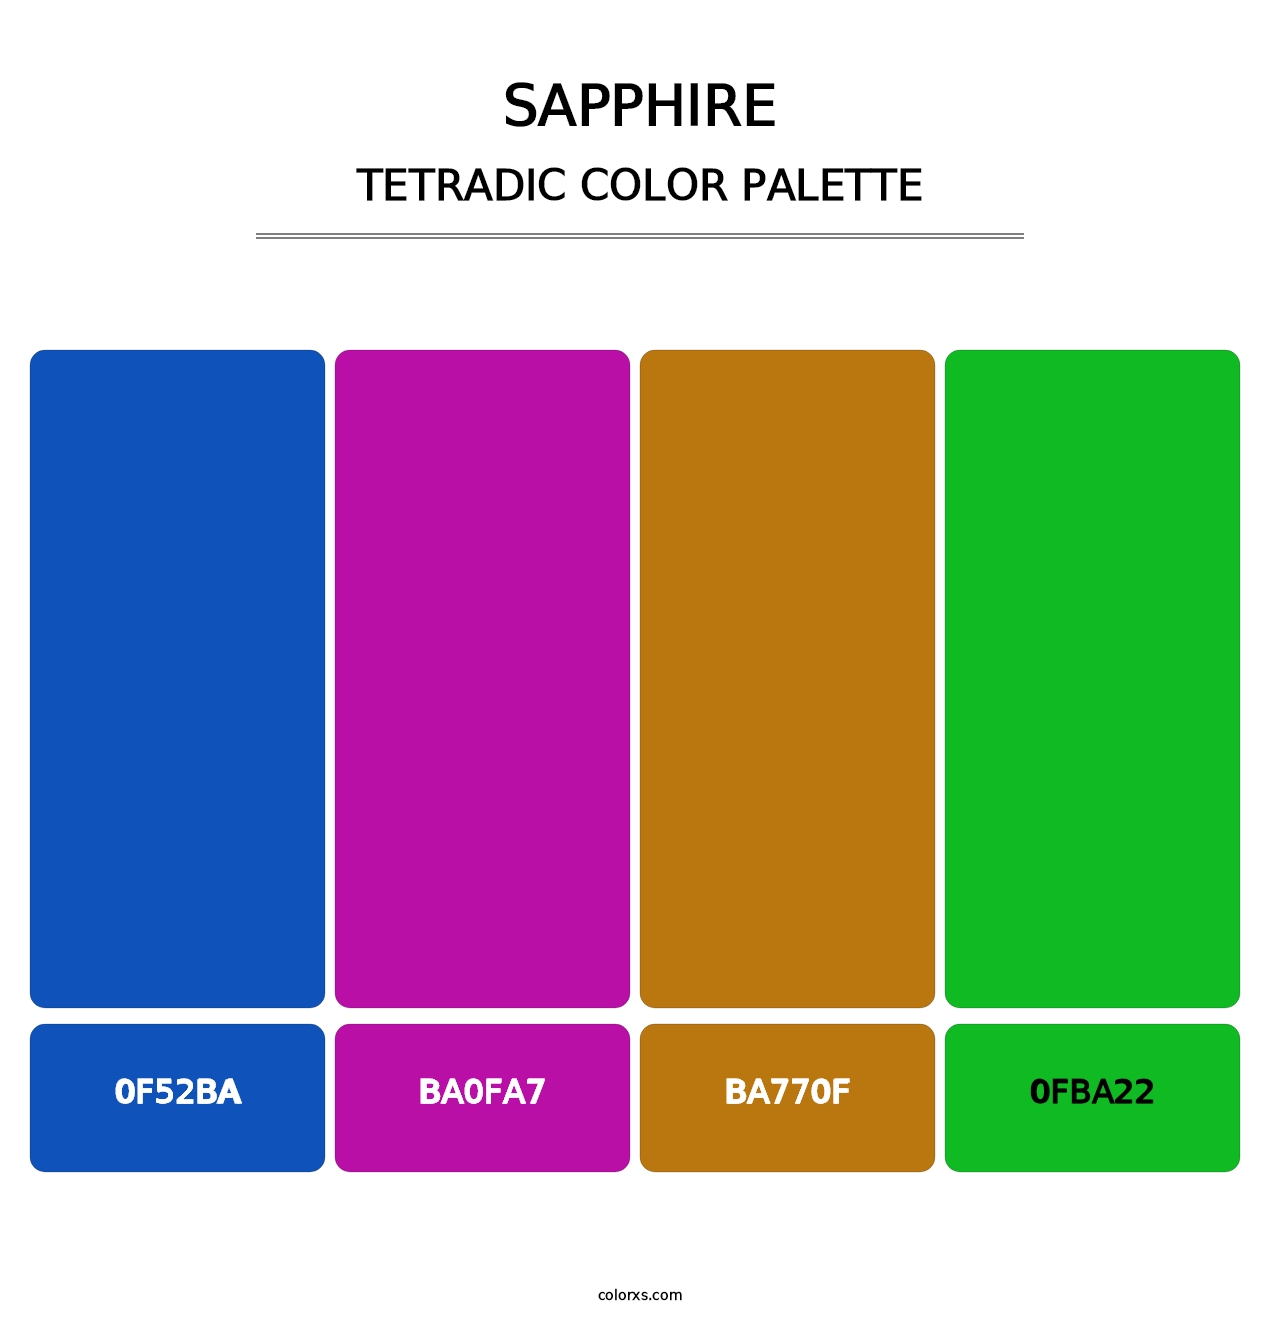 Sapphire - Tetradic Color Palette